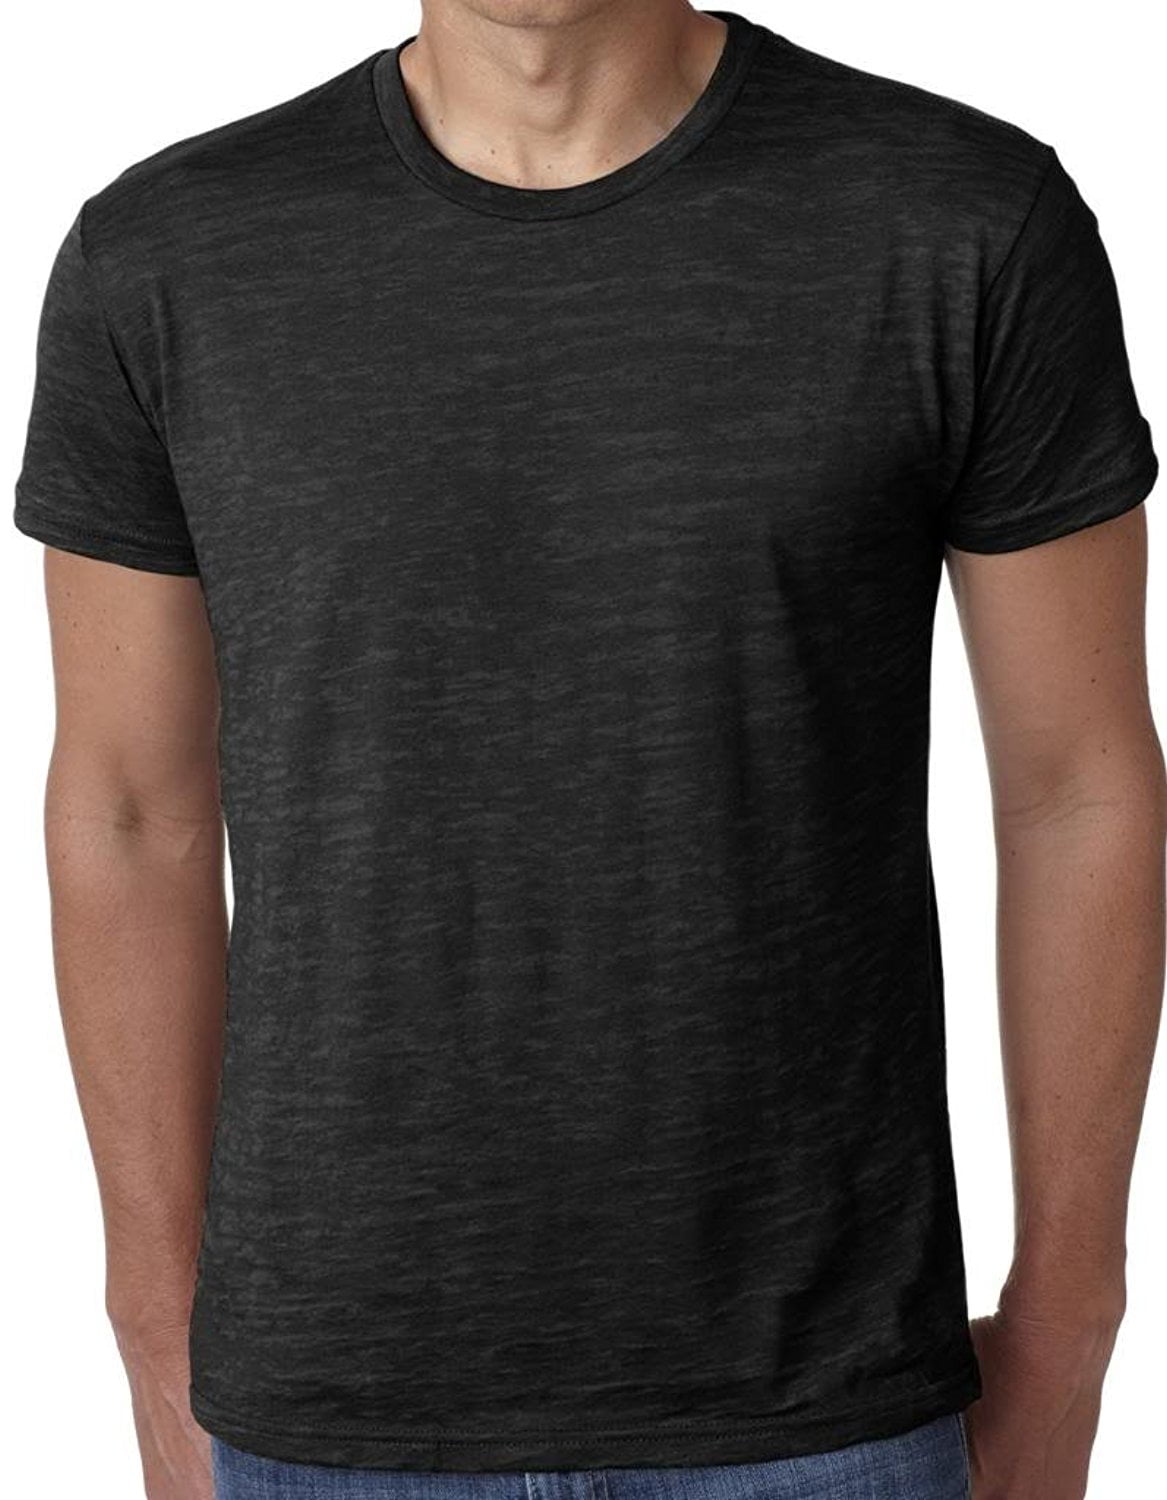 Men's Lightweight Burnout Yoga Tee Shirt - Black 